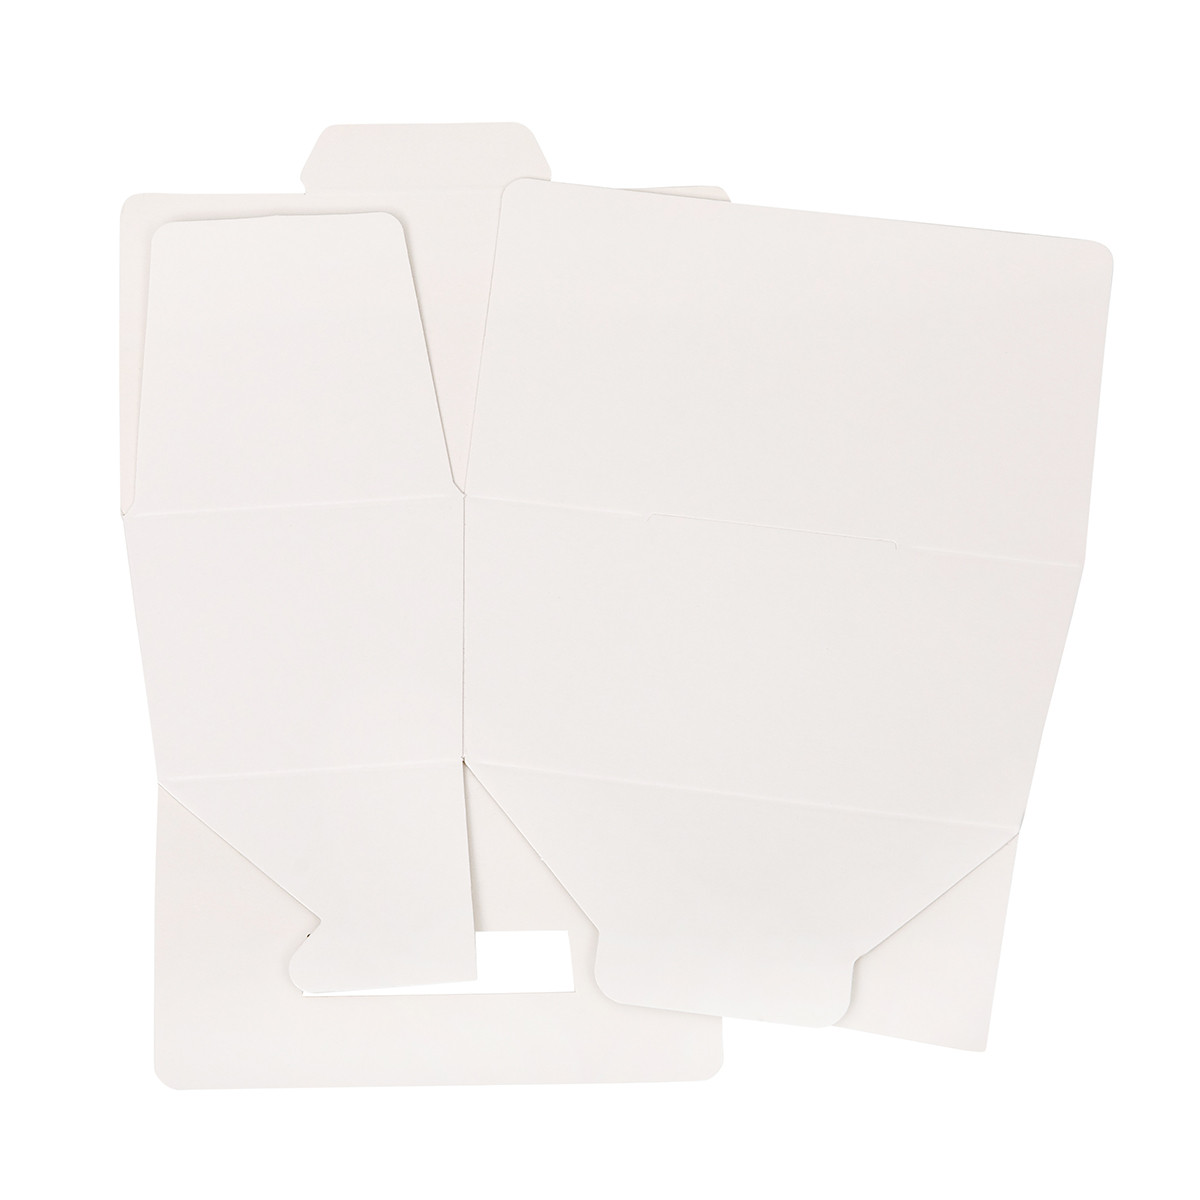 Bonbon box White Glossy -250g- 25 pieces